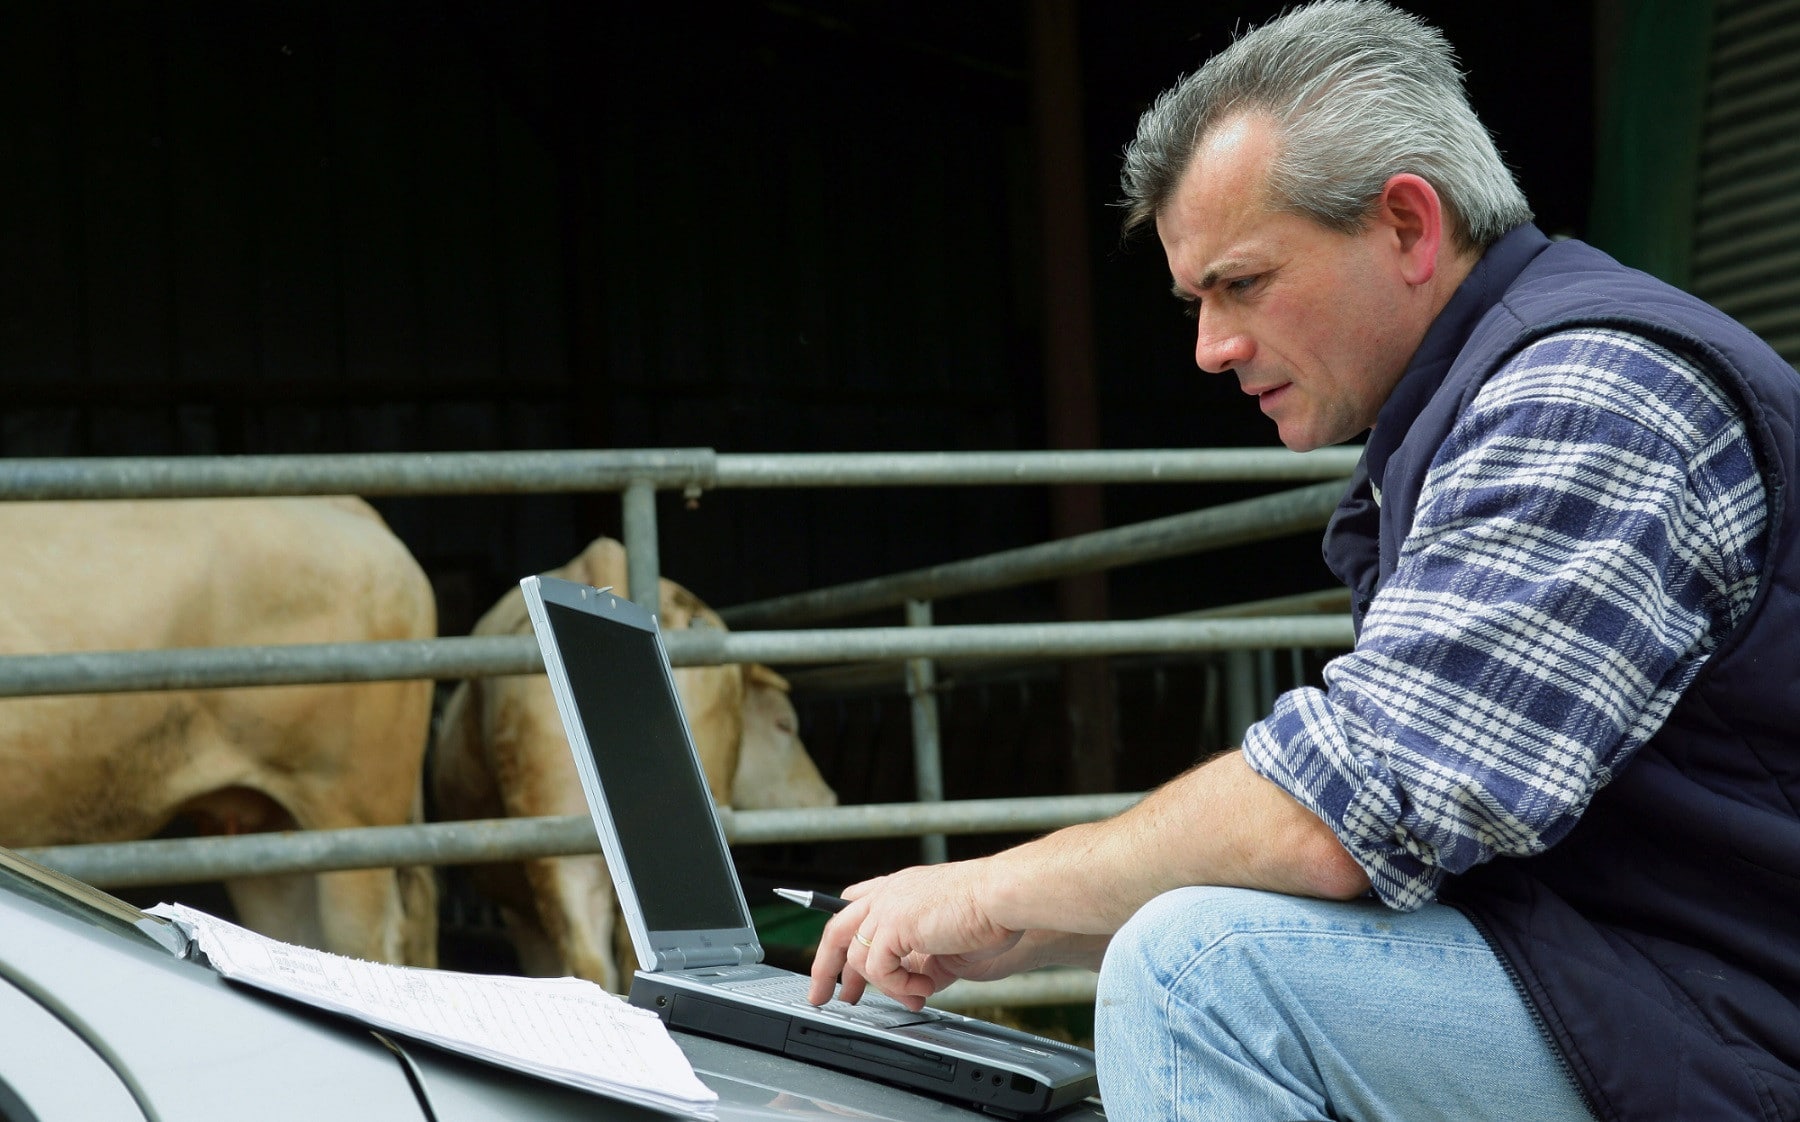 Farmer on computer